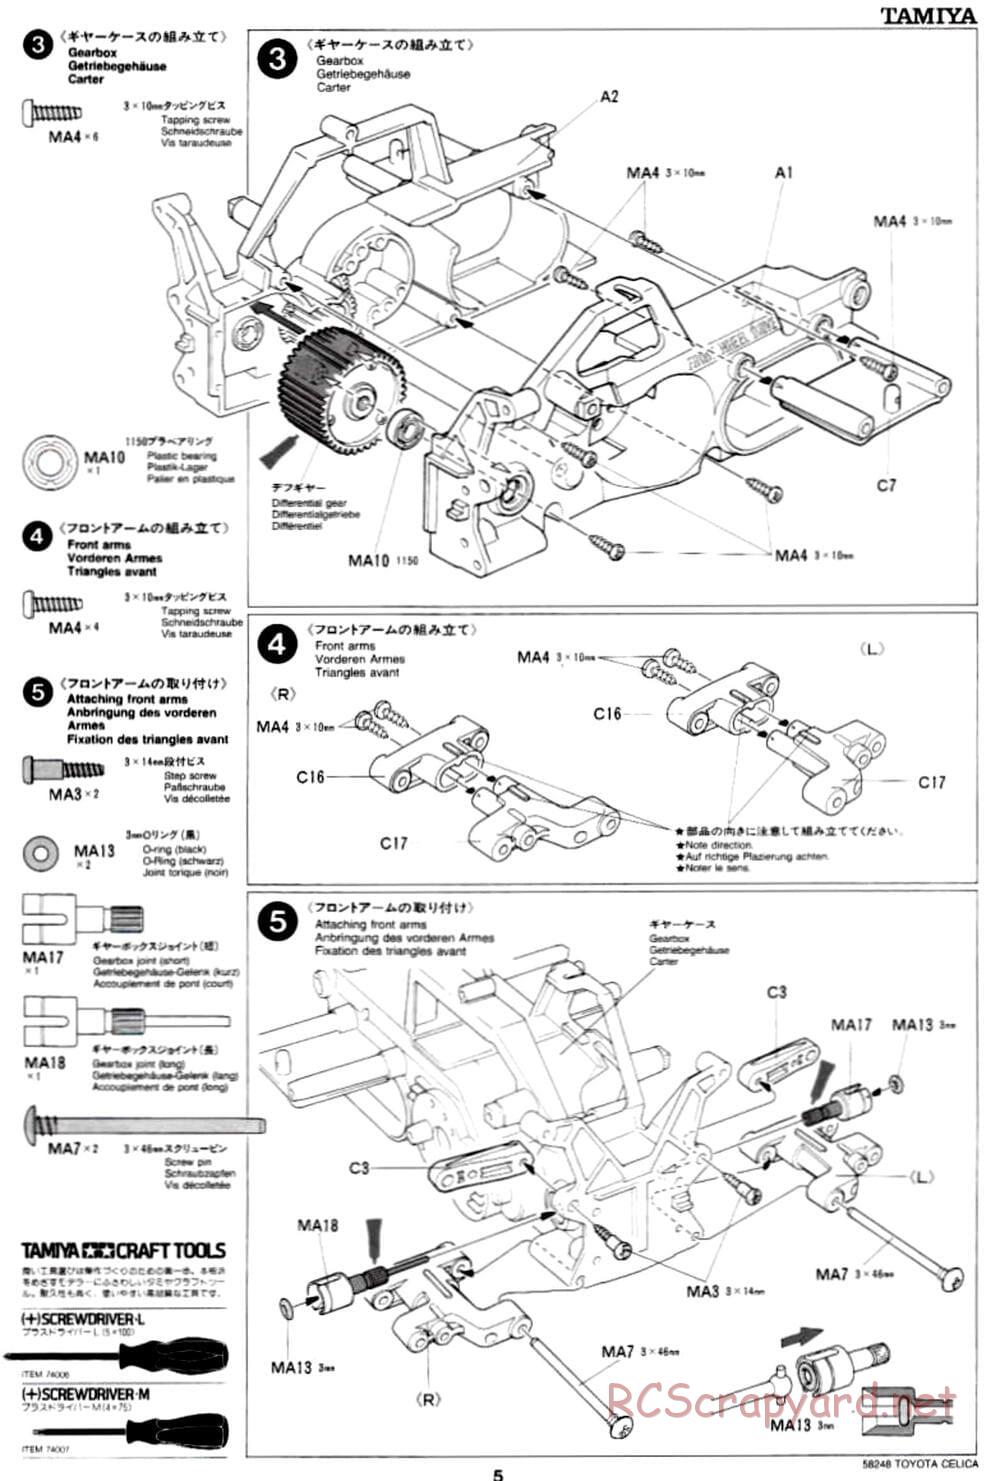 Tamiya - Toyota Celica - FF-02 Chassis - Manual - Page 5